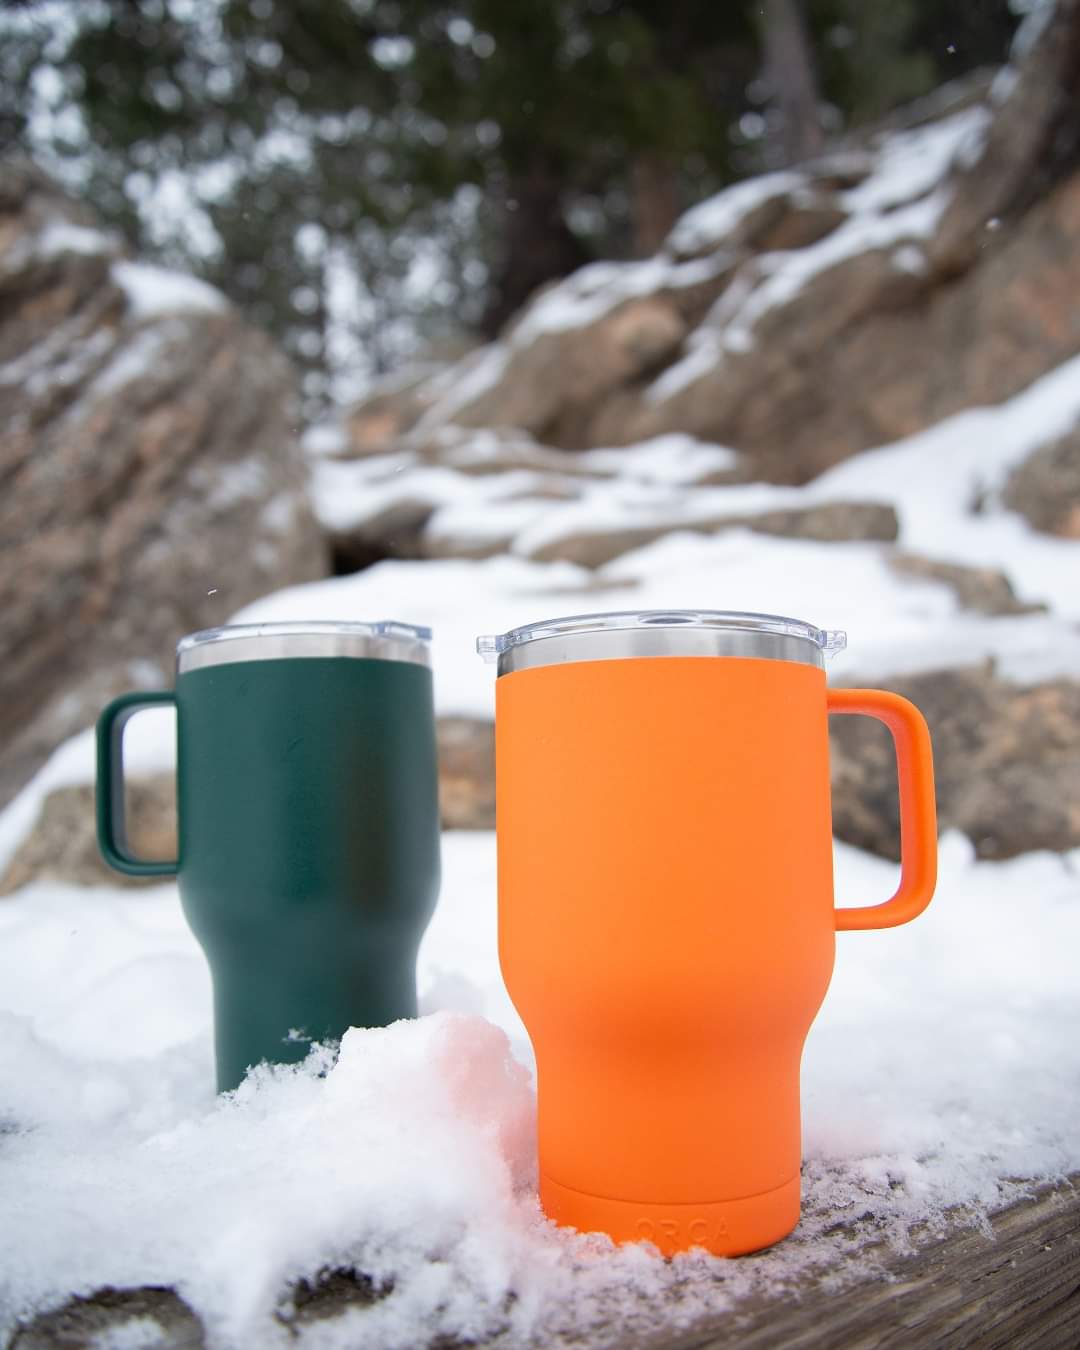 Green and orange orca traveler mugs sitting in snow